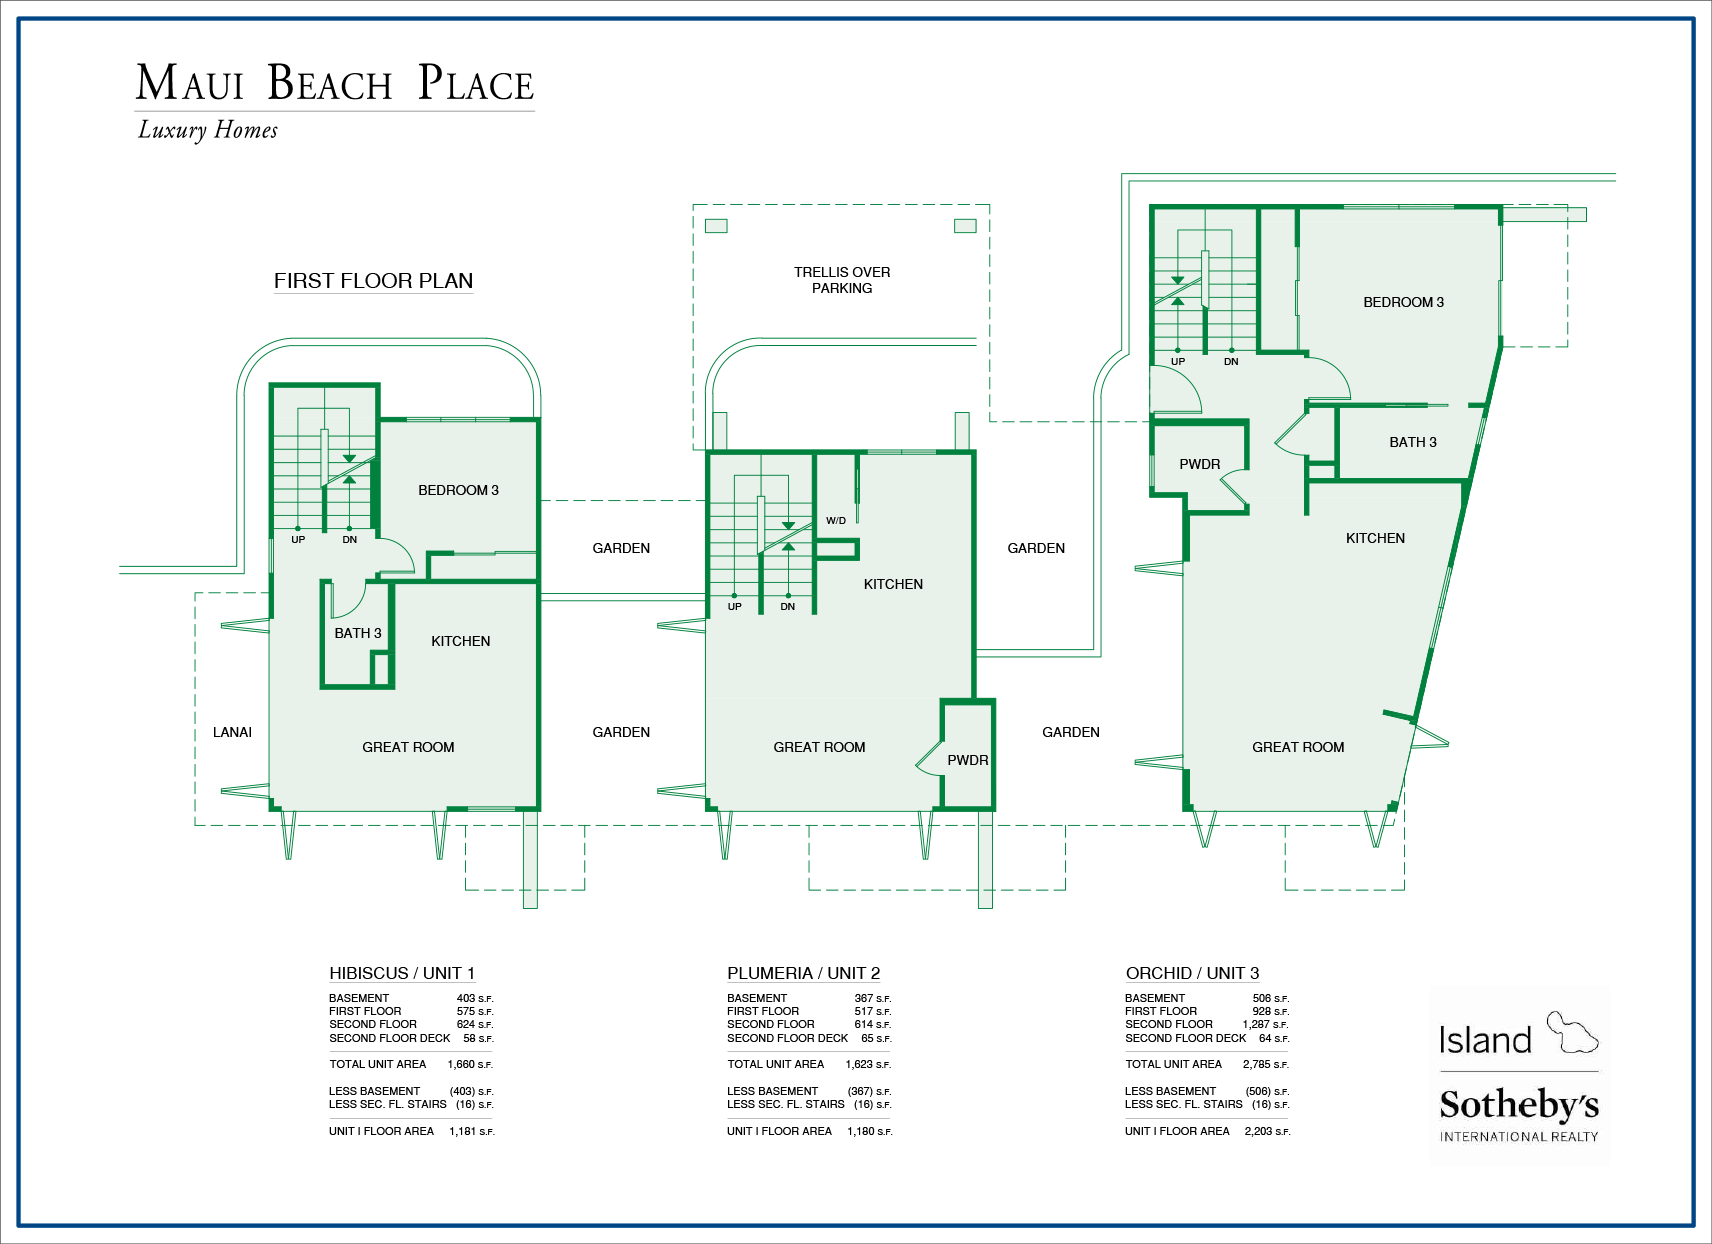 Map of Maui Beach Place